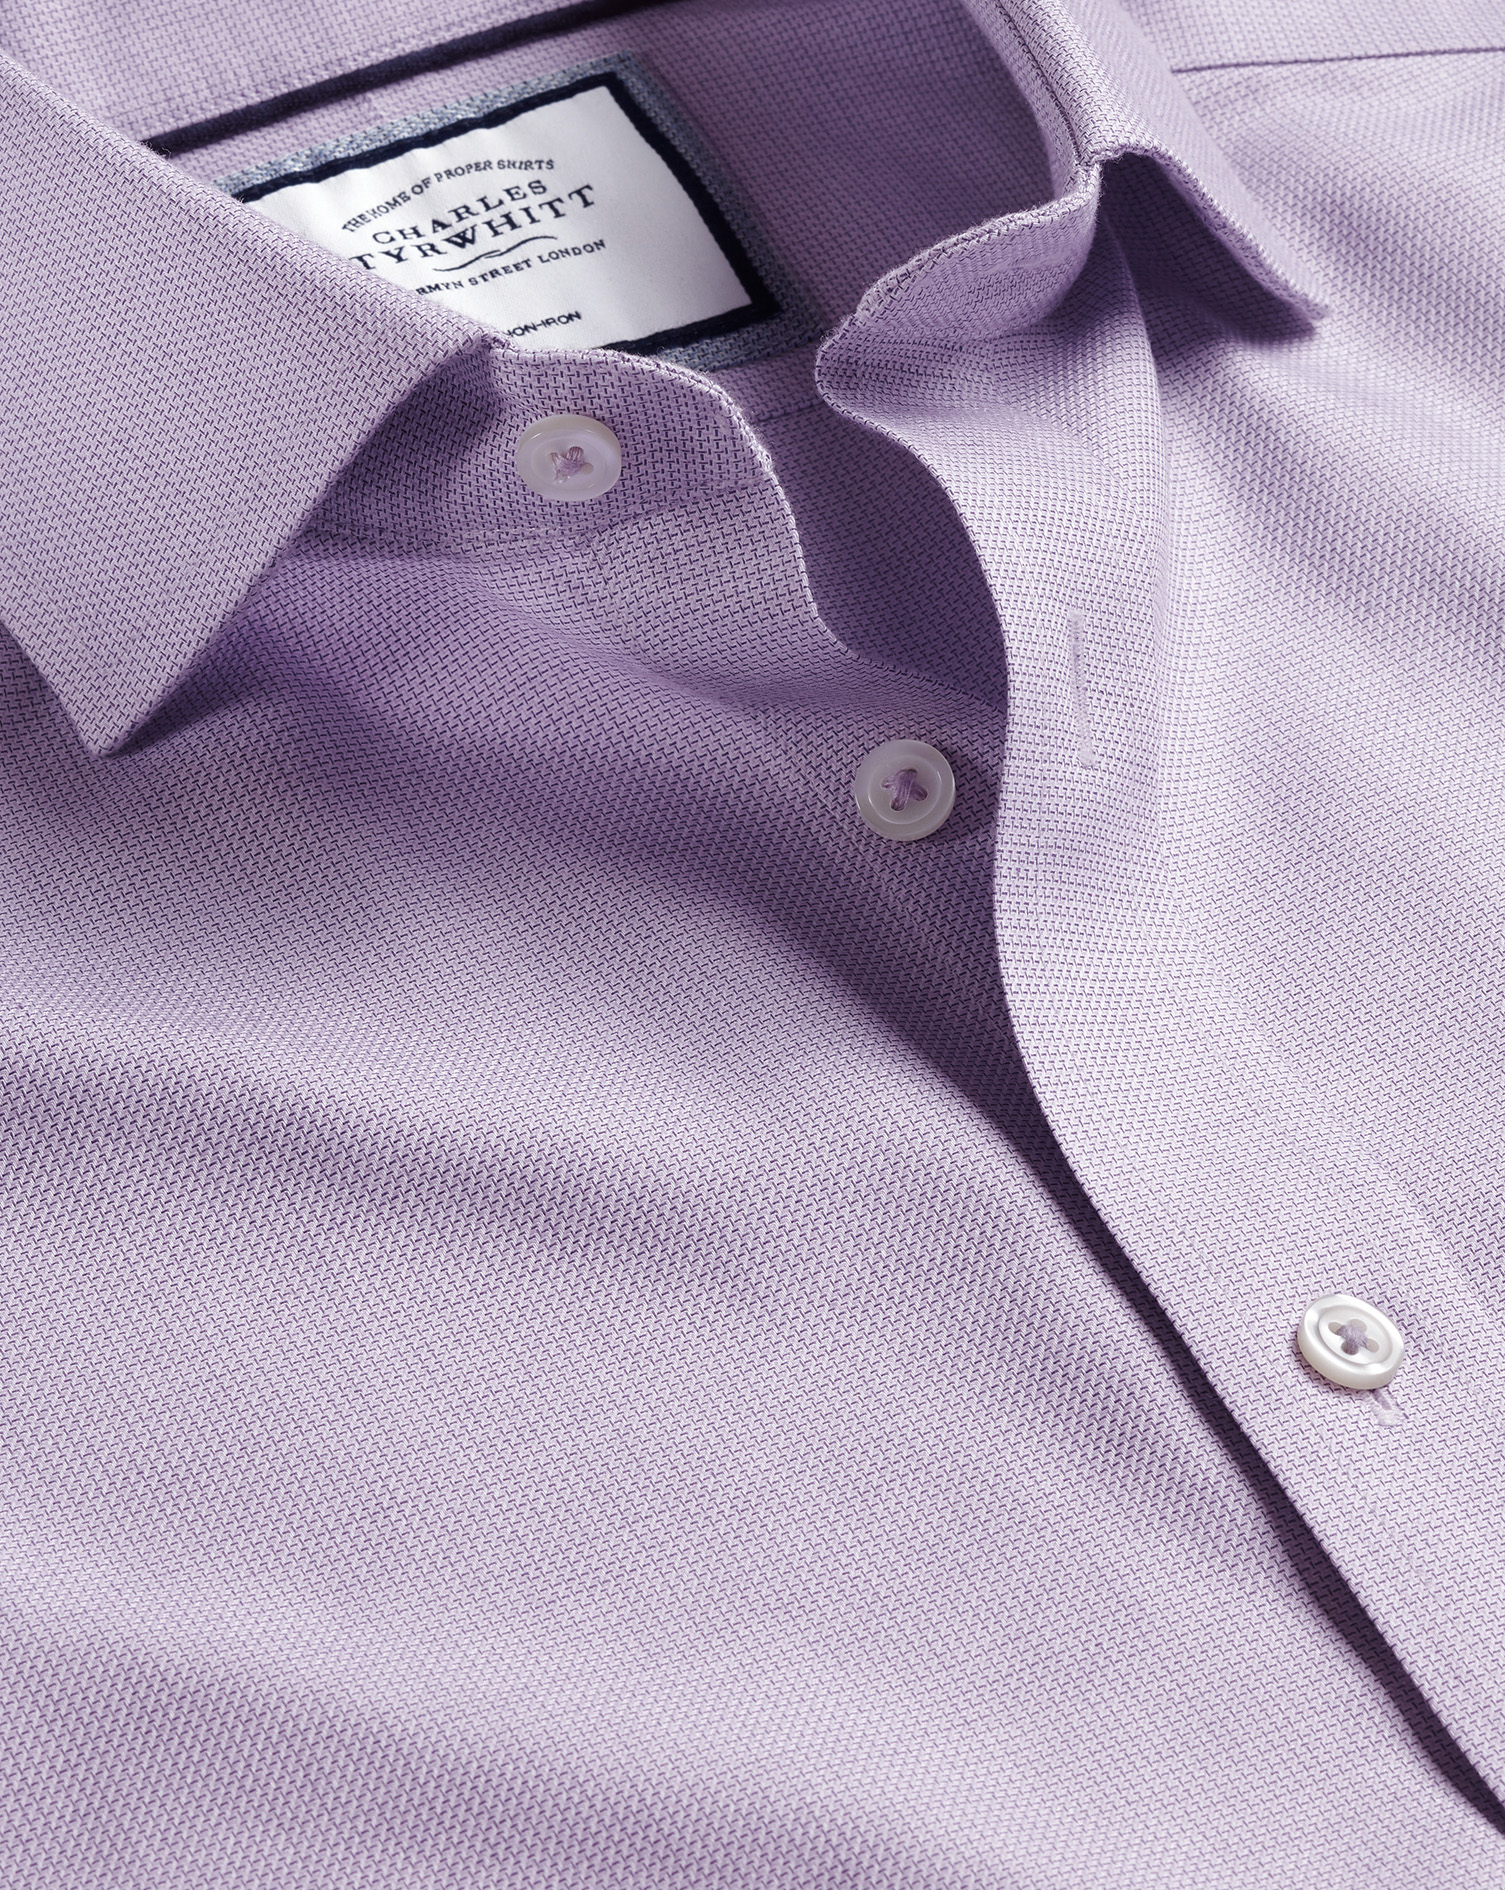 Cutaway Collar Non-Iron Richmond Weave Cotton Dress Shirt - Mauve Purple Single Cuff Size 18/35
